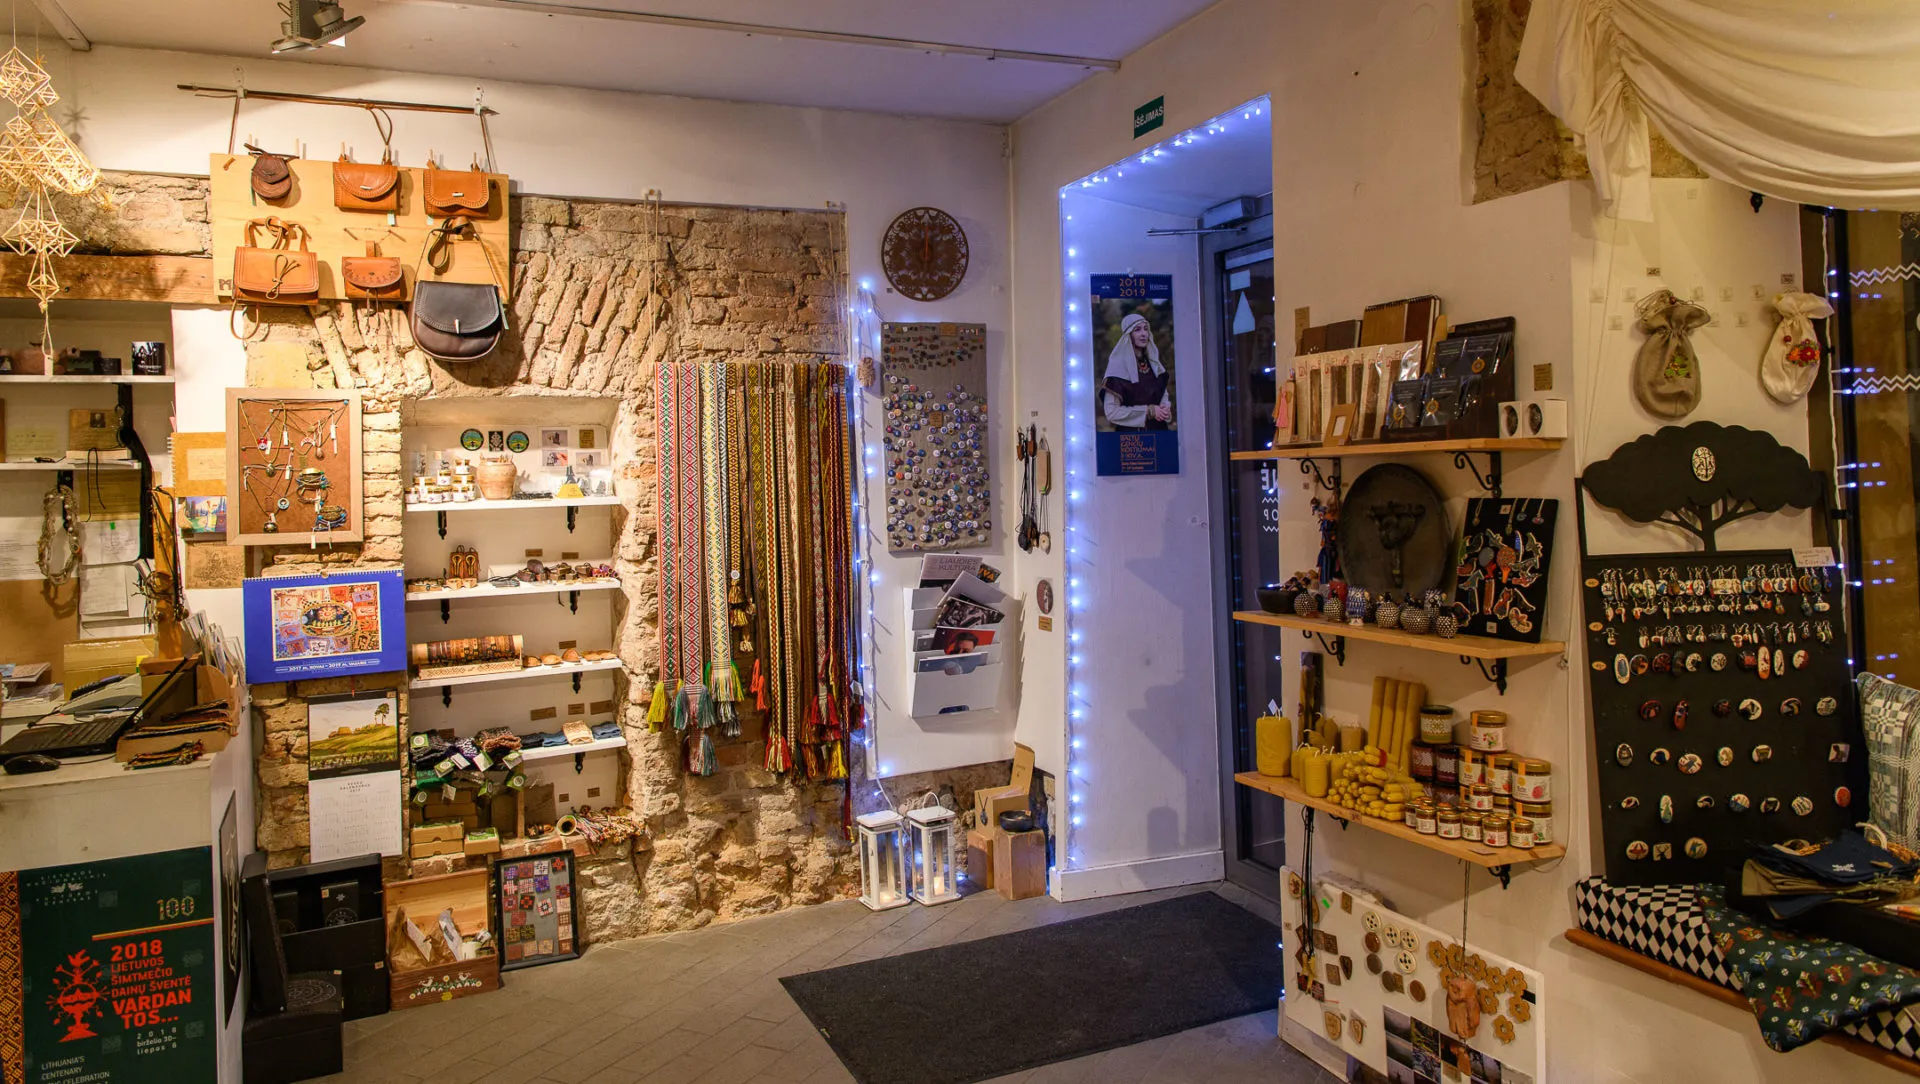 Cornea - Baltik Shop in Lithuania, europe | Souvenirs - Country Helper